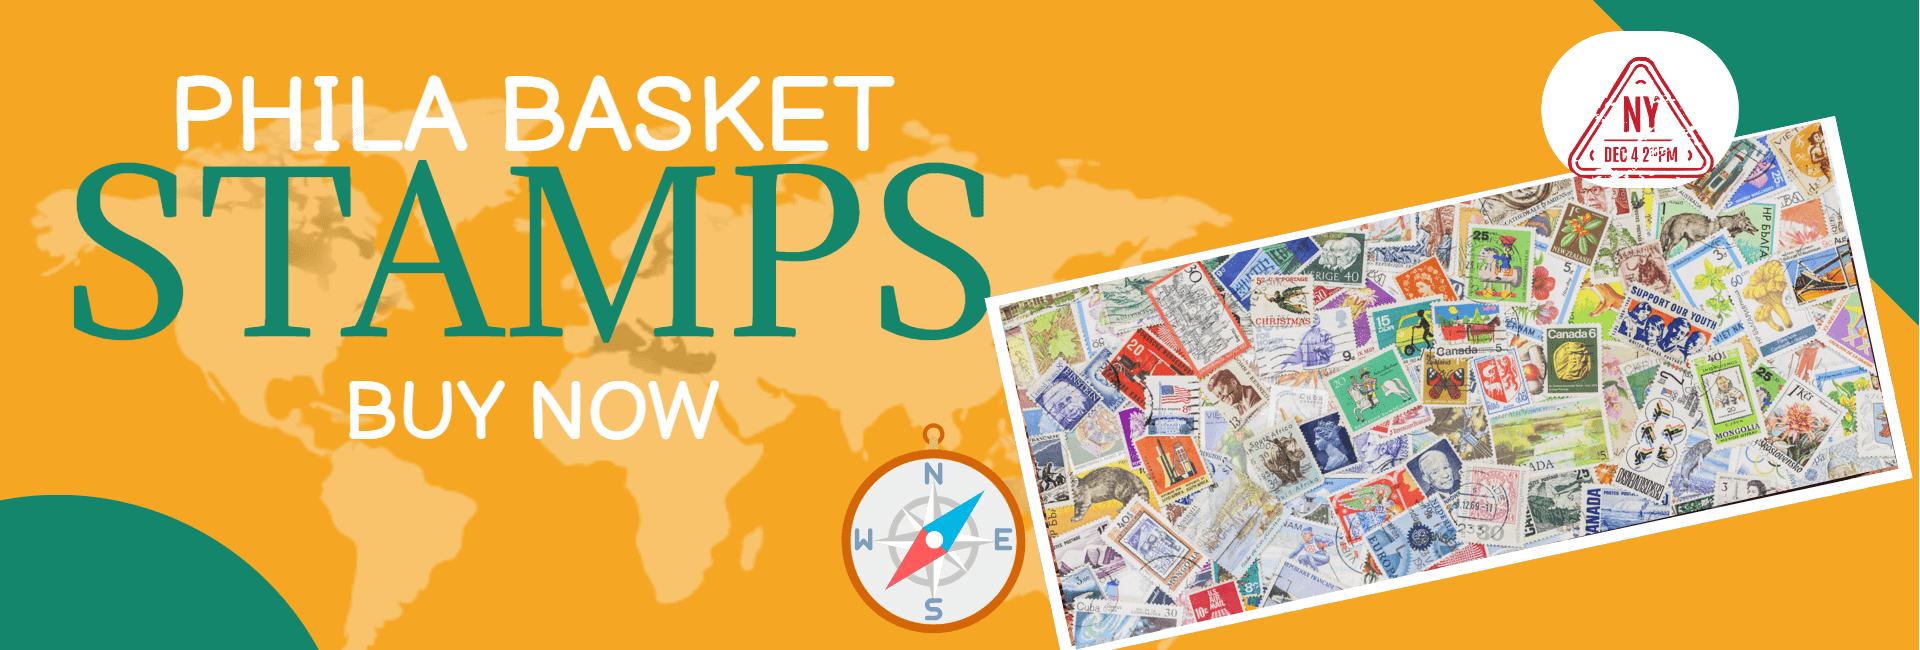 phila-basket-buy-now-stamps-5-1-min